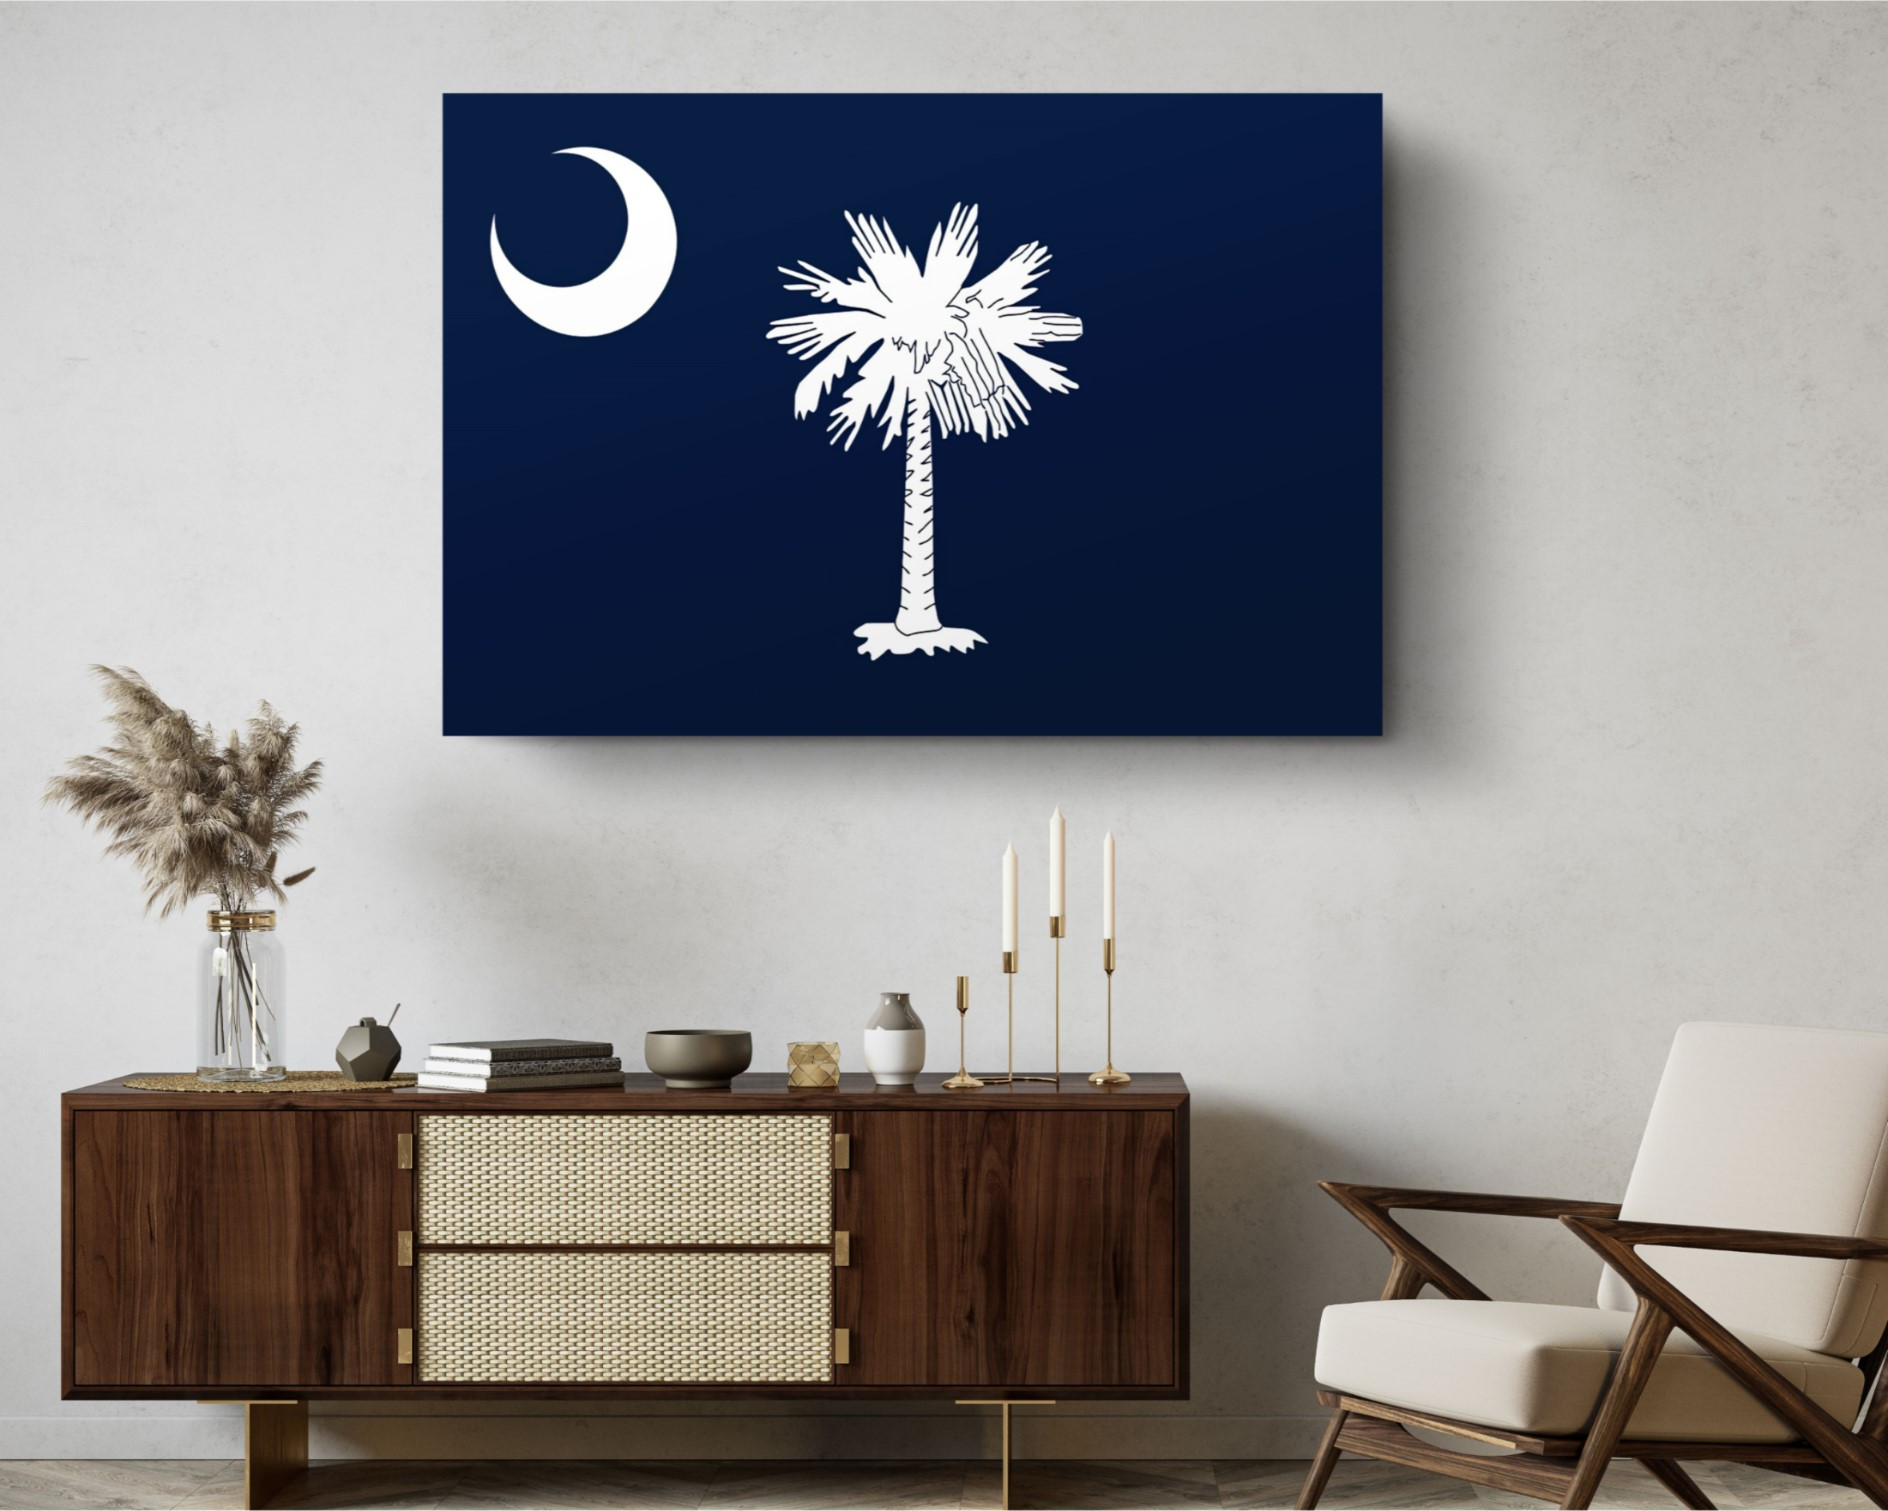 South Carolina State Flag USA Flags Edition Canvas Wall Art Home Decoration